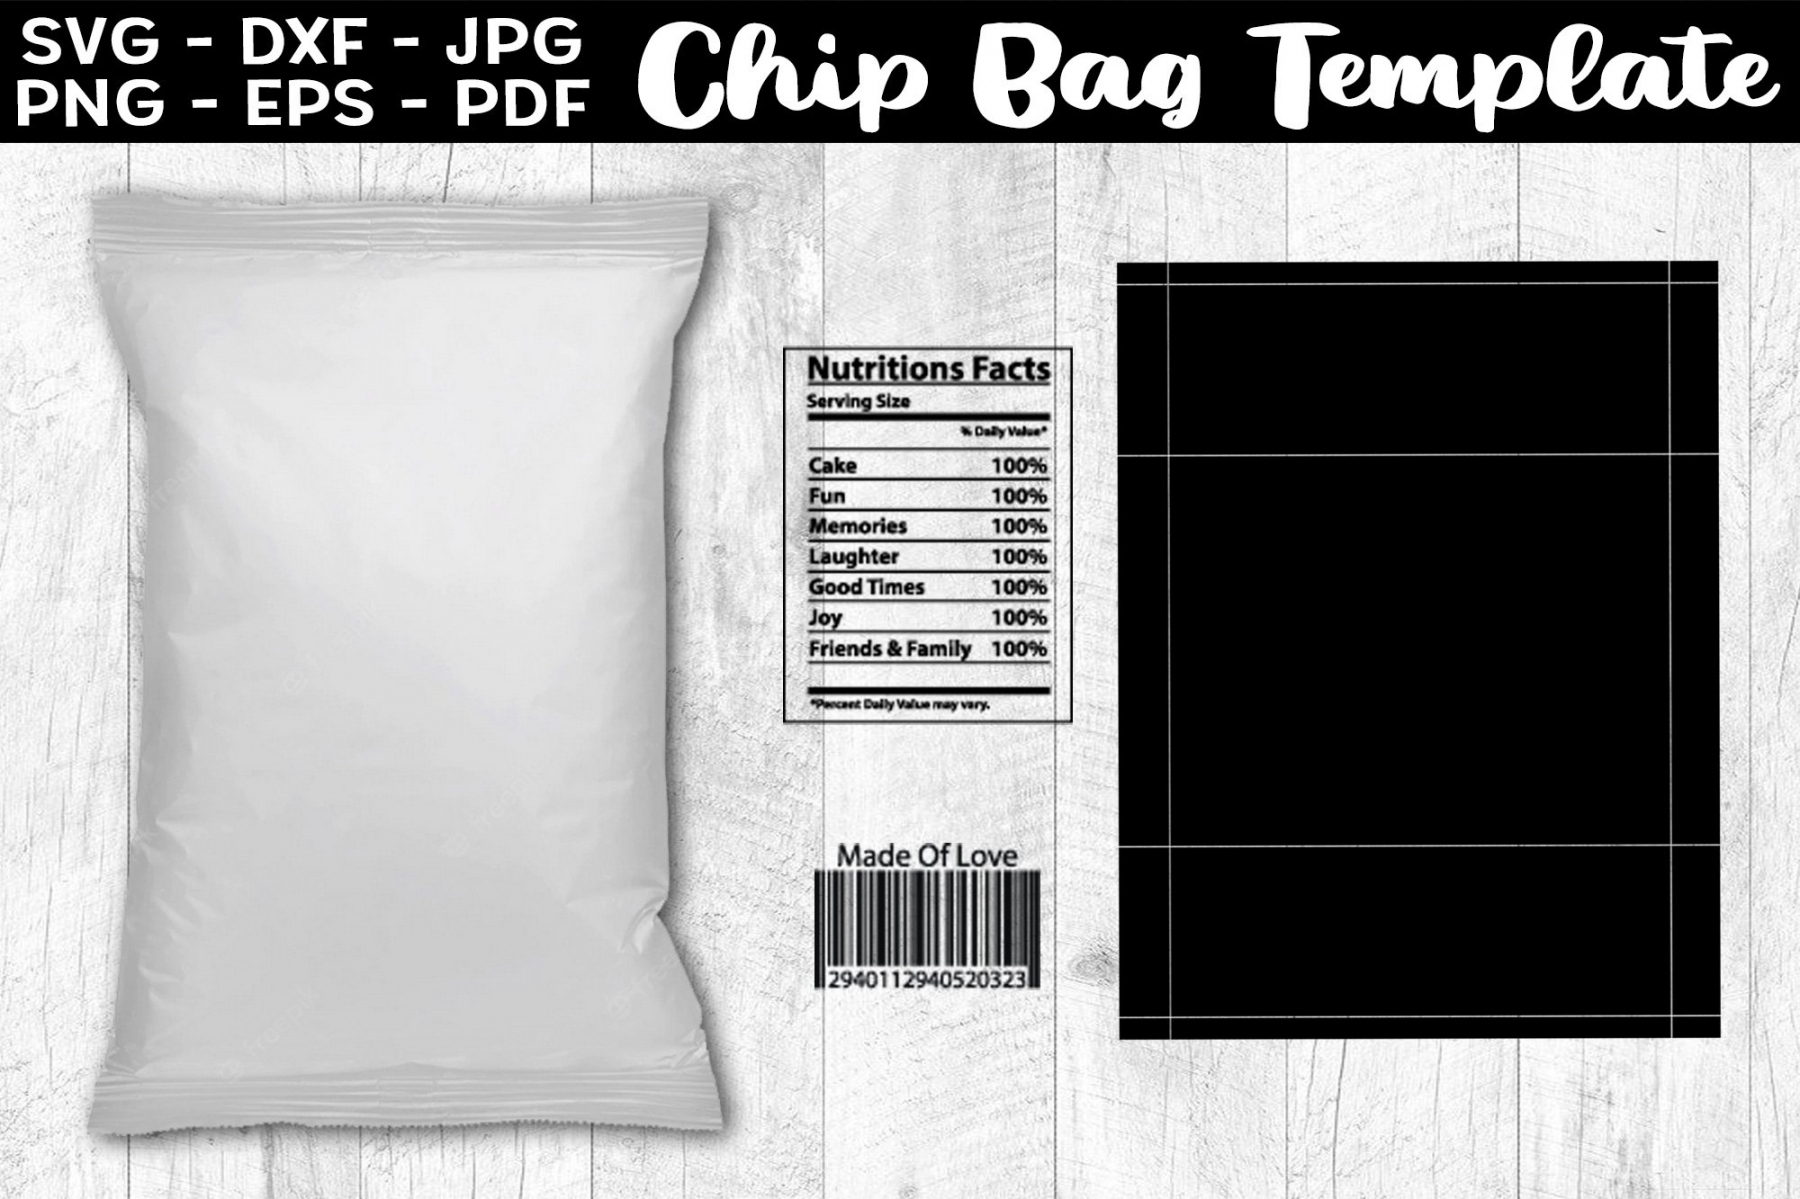 Chip Bag Template SVG Potato Chip Bag Template PNG SVG - FREE Printables - Downloadable Free Printable Chip Bag Template